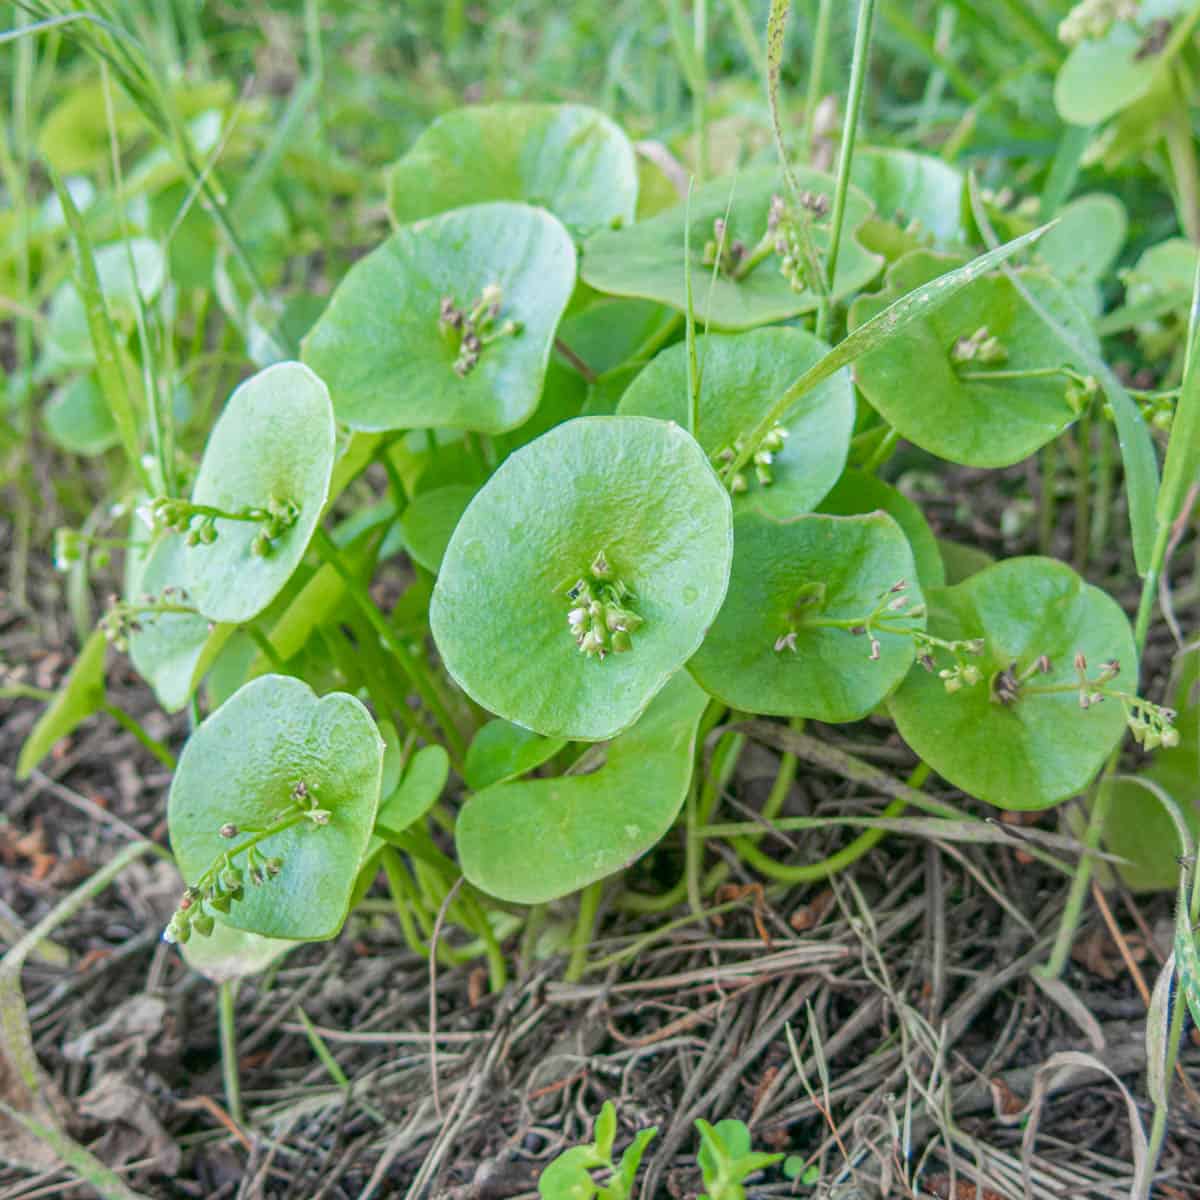 Miners lettuce, or Claytonia perfoliata